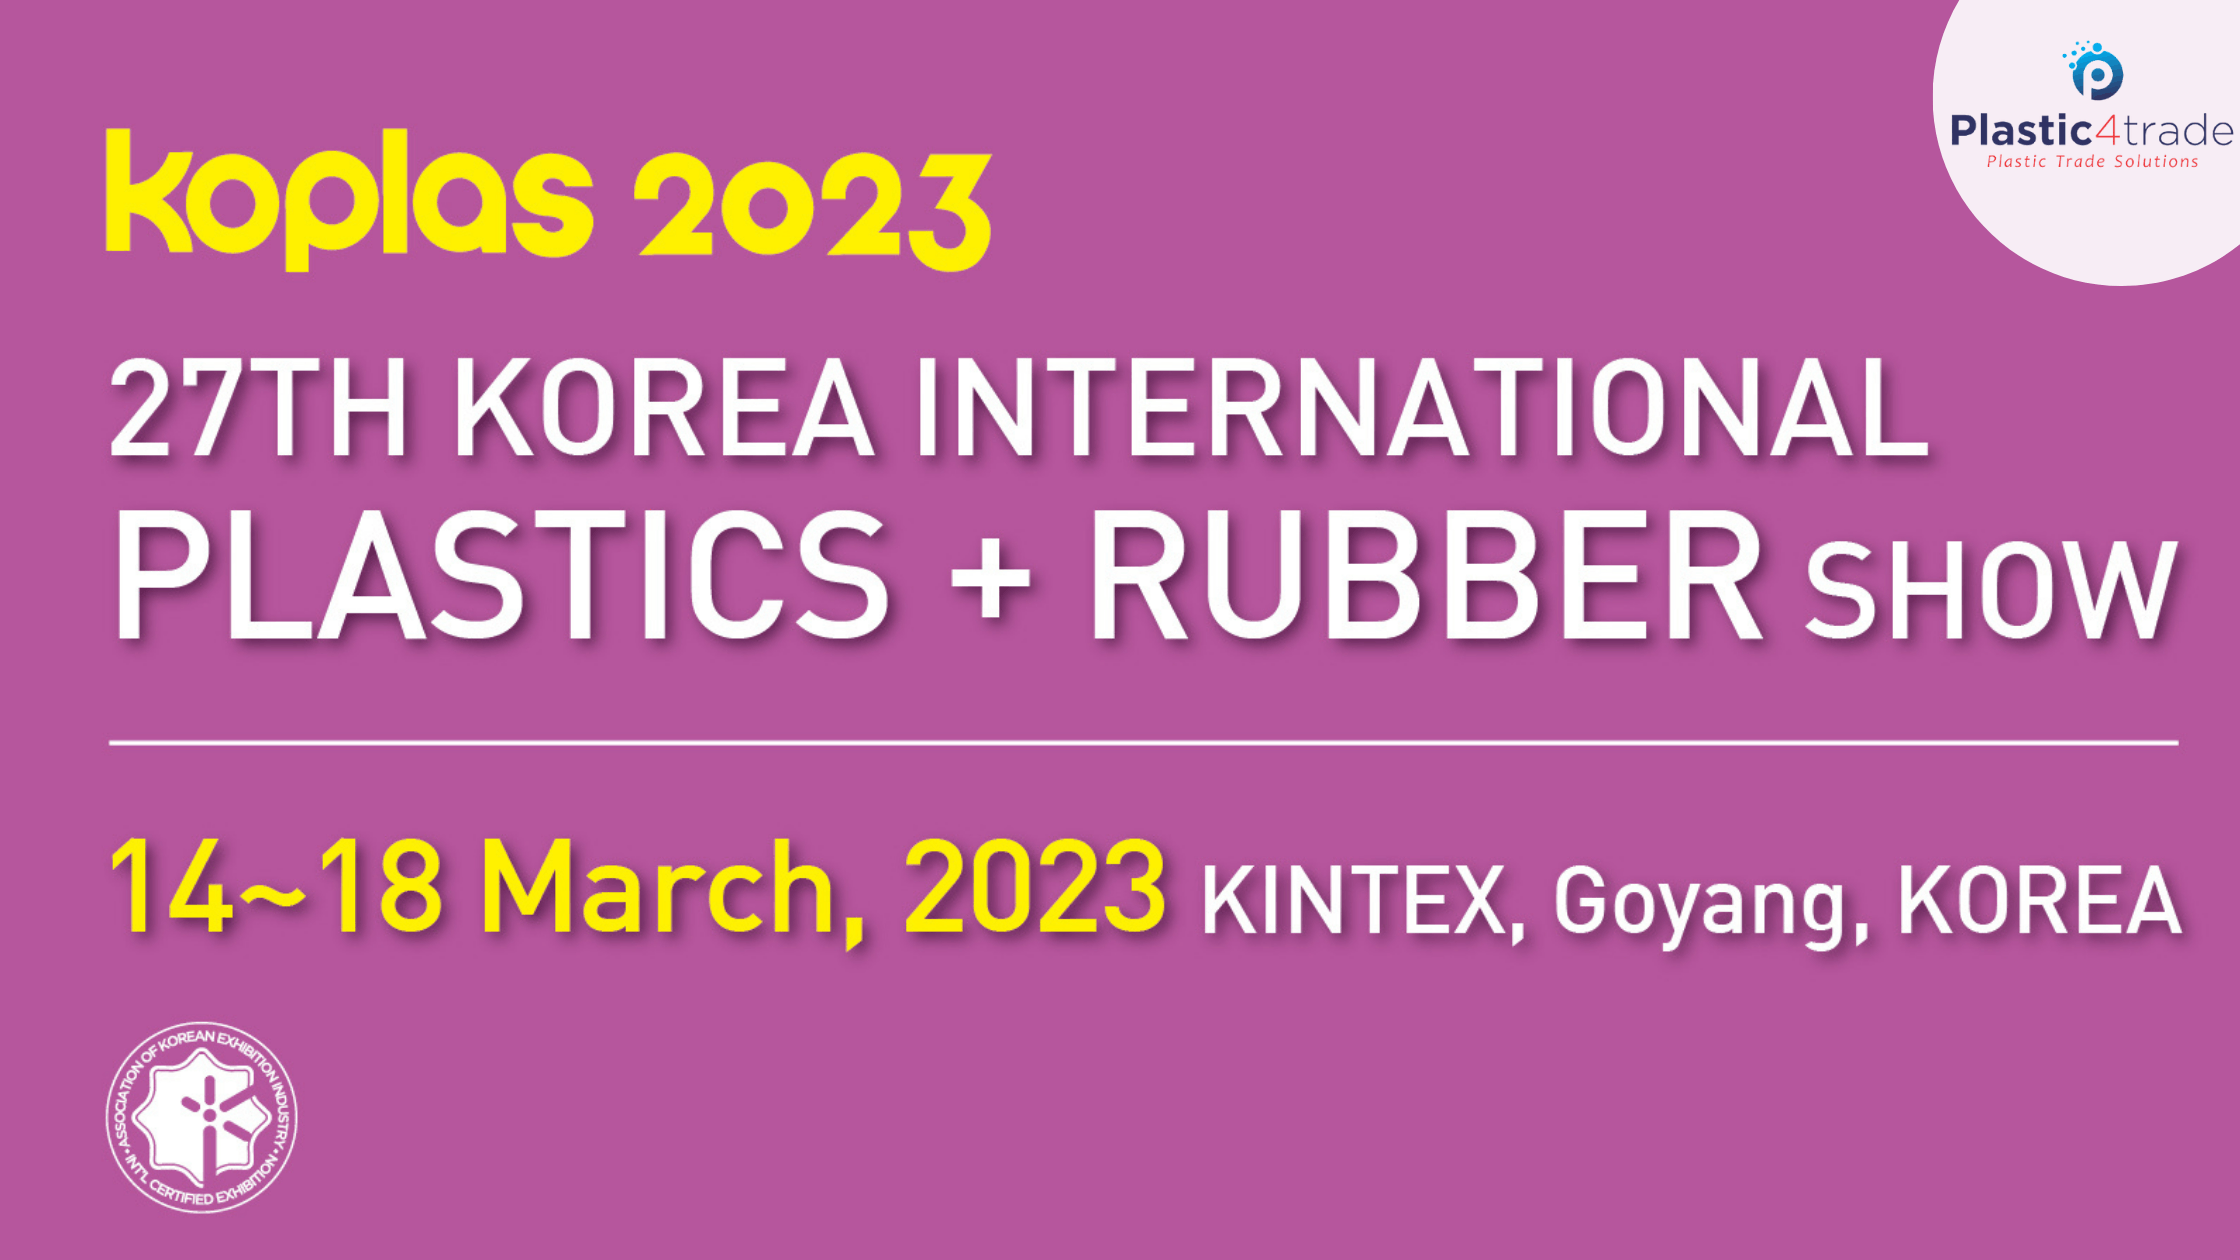 KOPLAS Korea International Plastics and Rubber Show Exhibition 2023 Plastic4trade